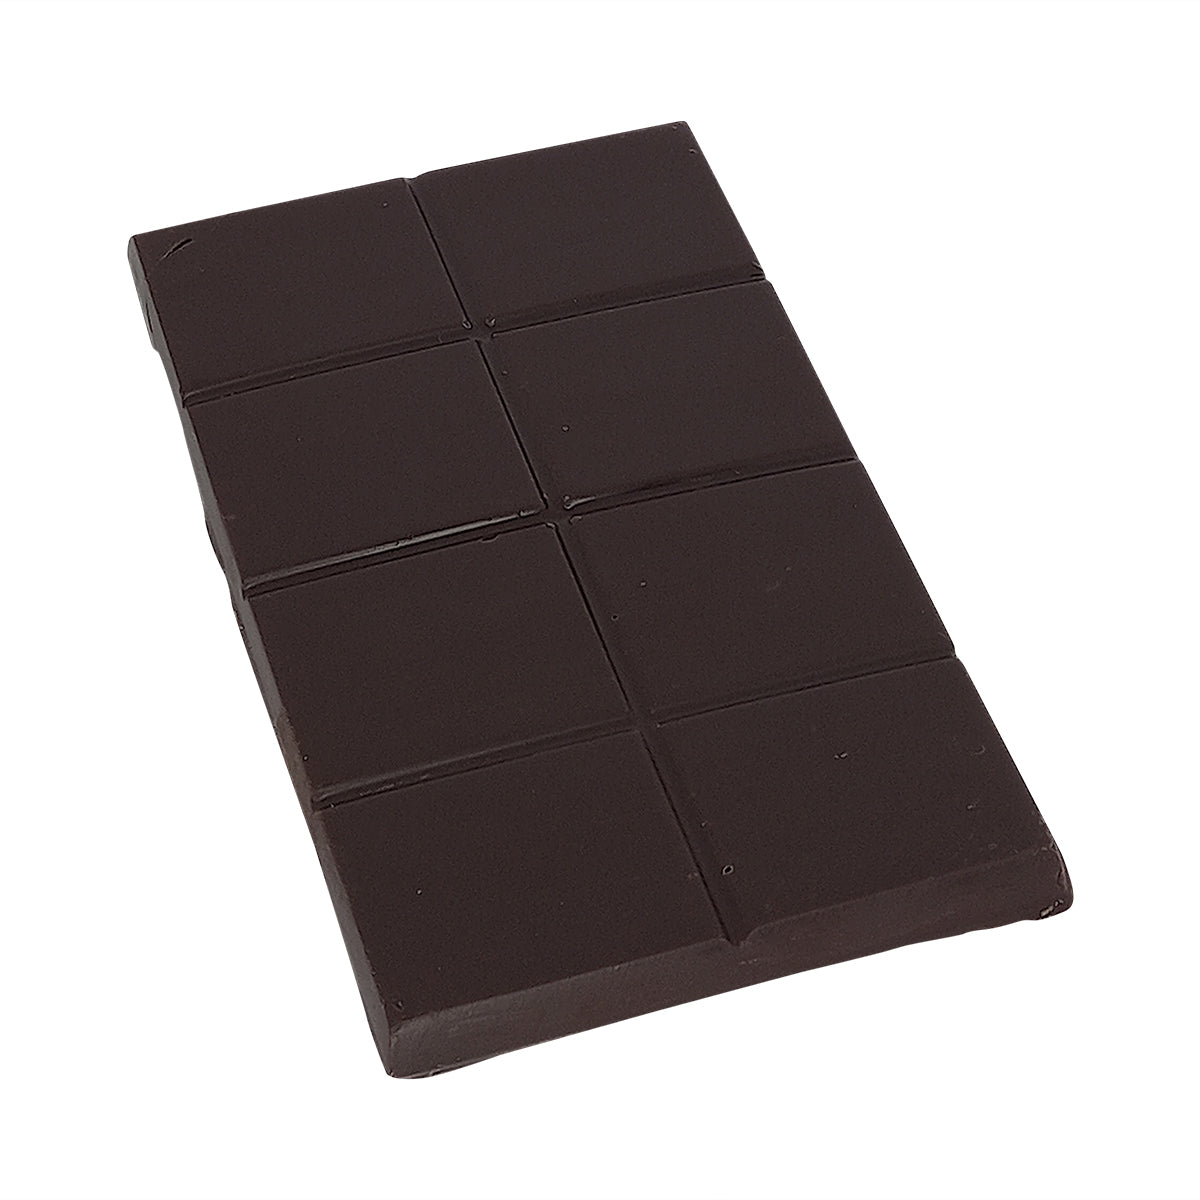 Organic 70% Chocolate Sweetened With Panela - Bars